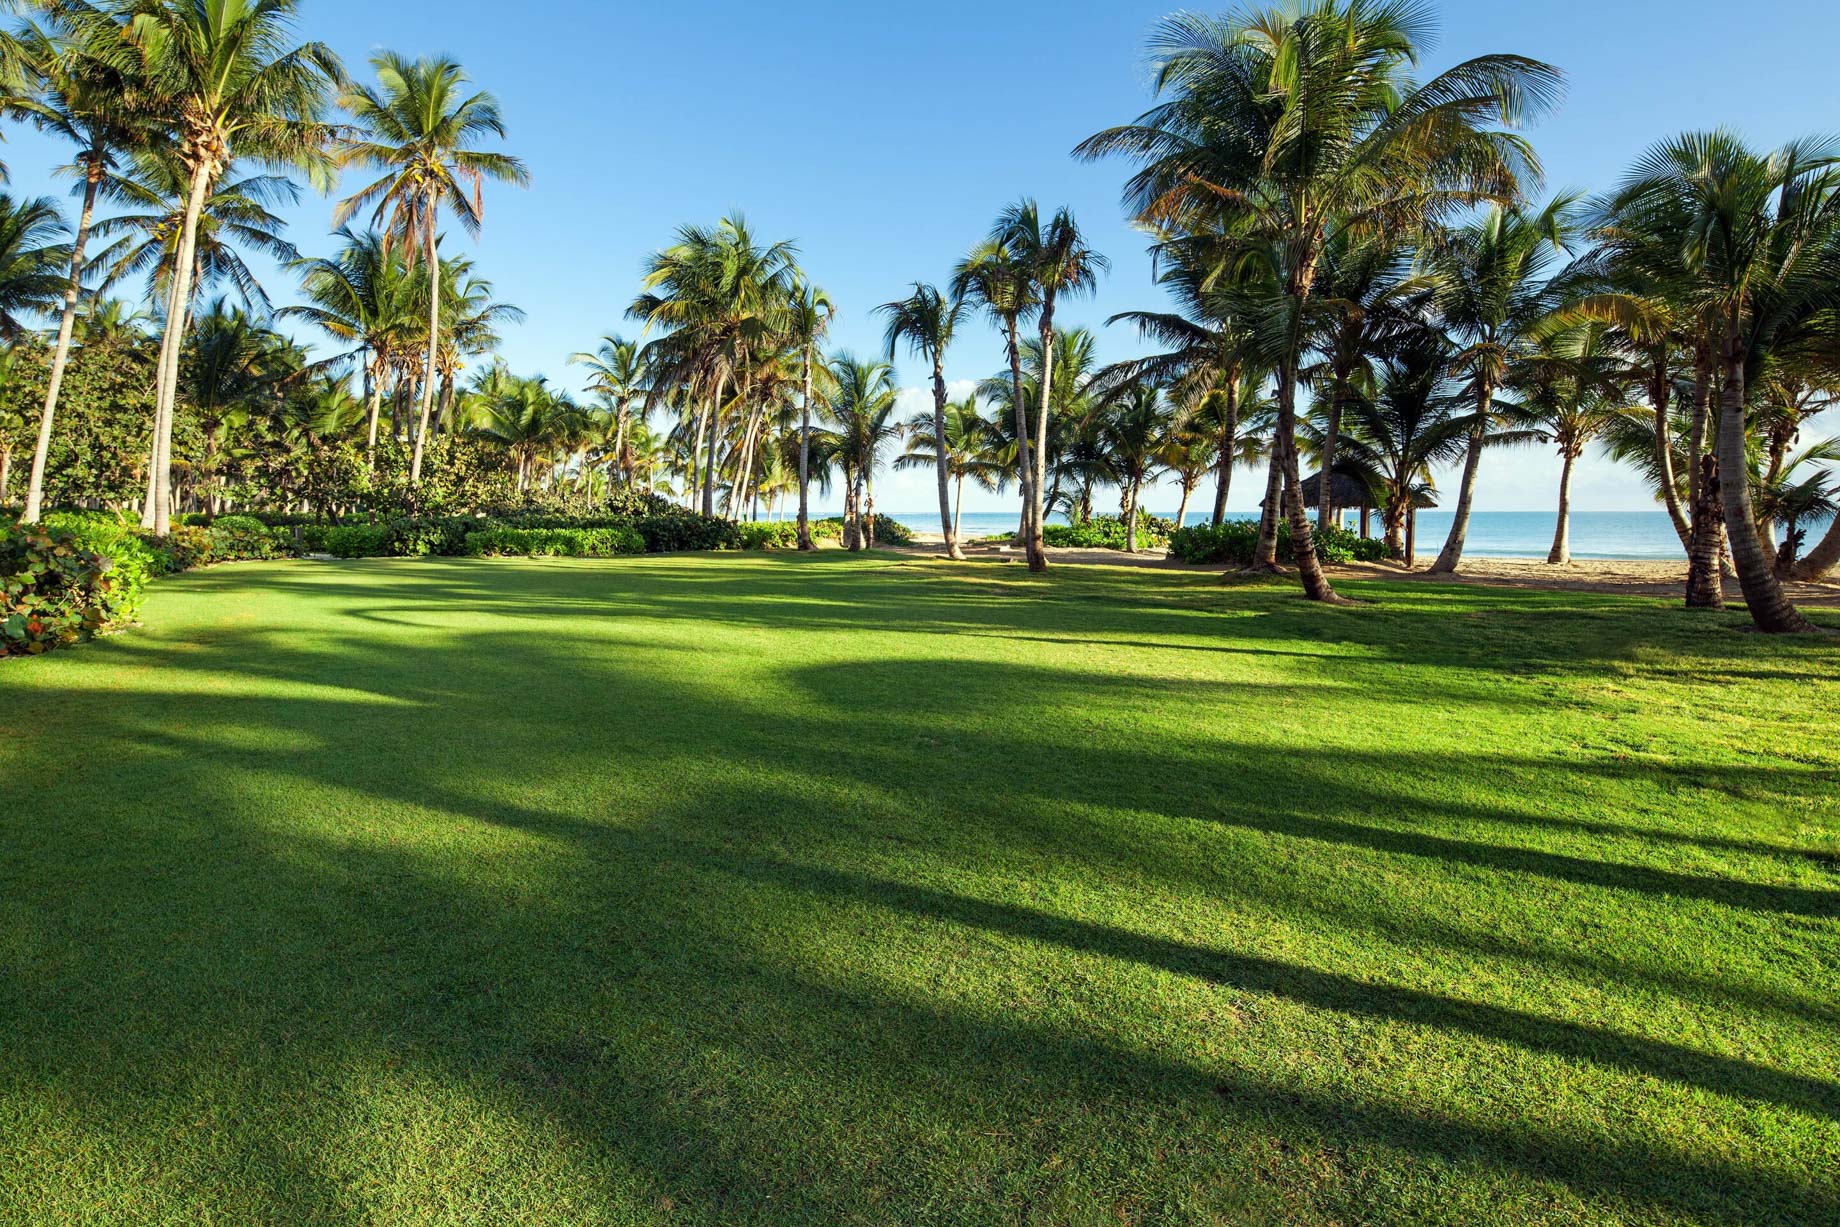 The St. Regis Bahia Beach Resort – Rio Grande, Puerto Rico – Resort Seabreeze Lawn